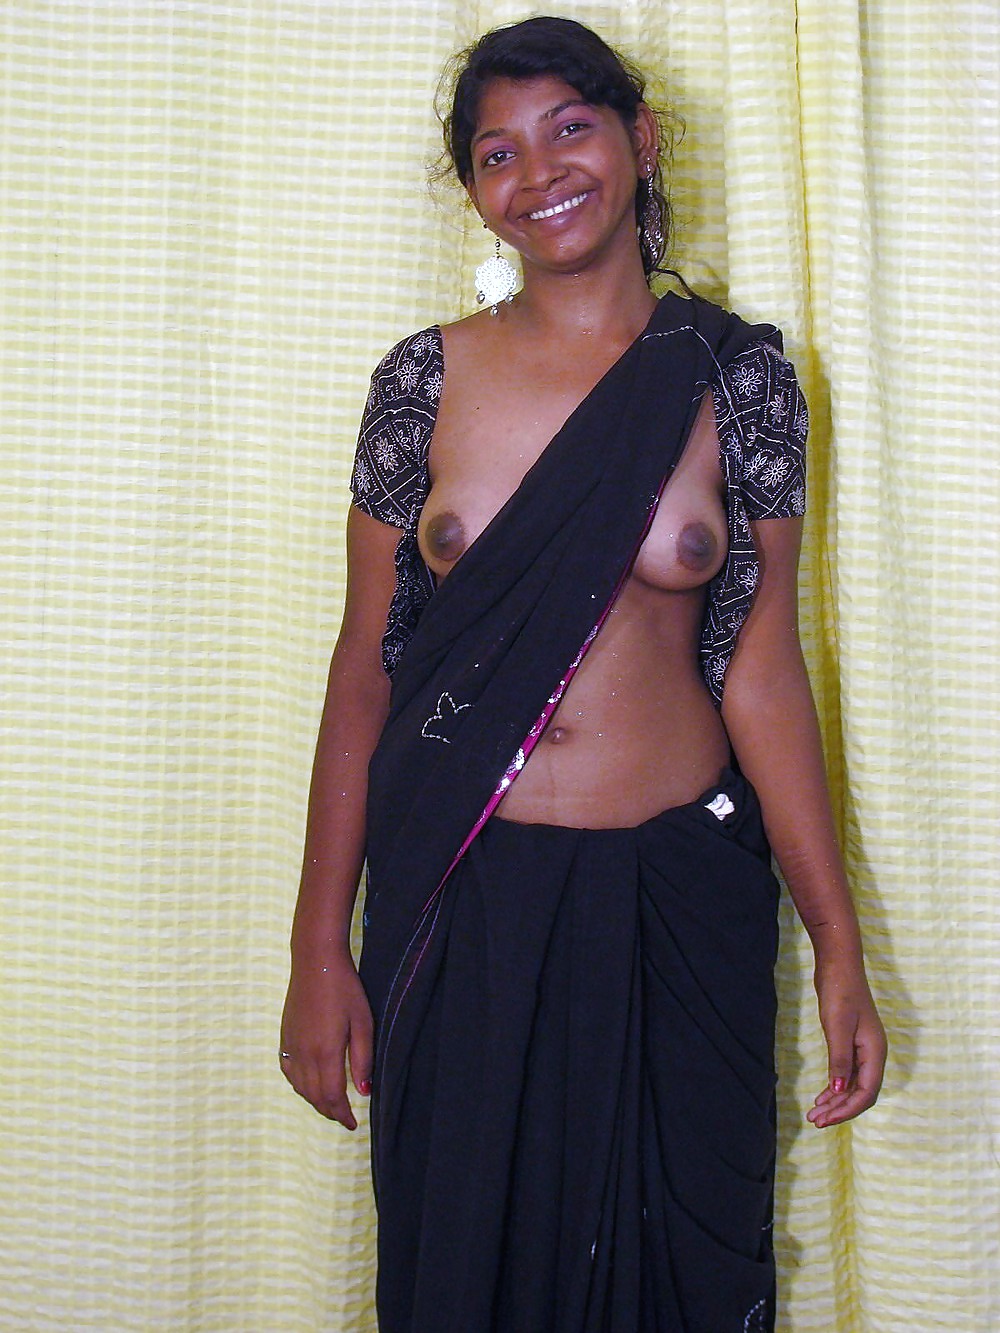 Desi Bala Chaud Et Sexy - Hardcore Indien #24979495